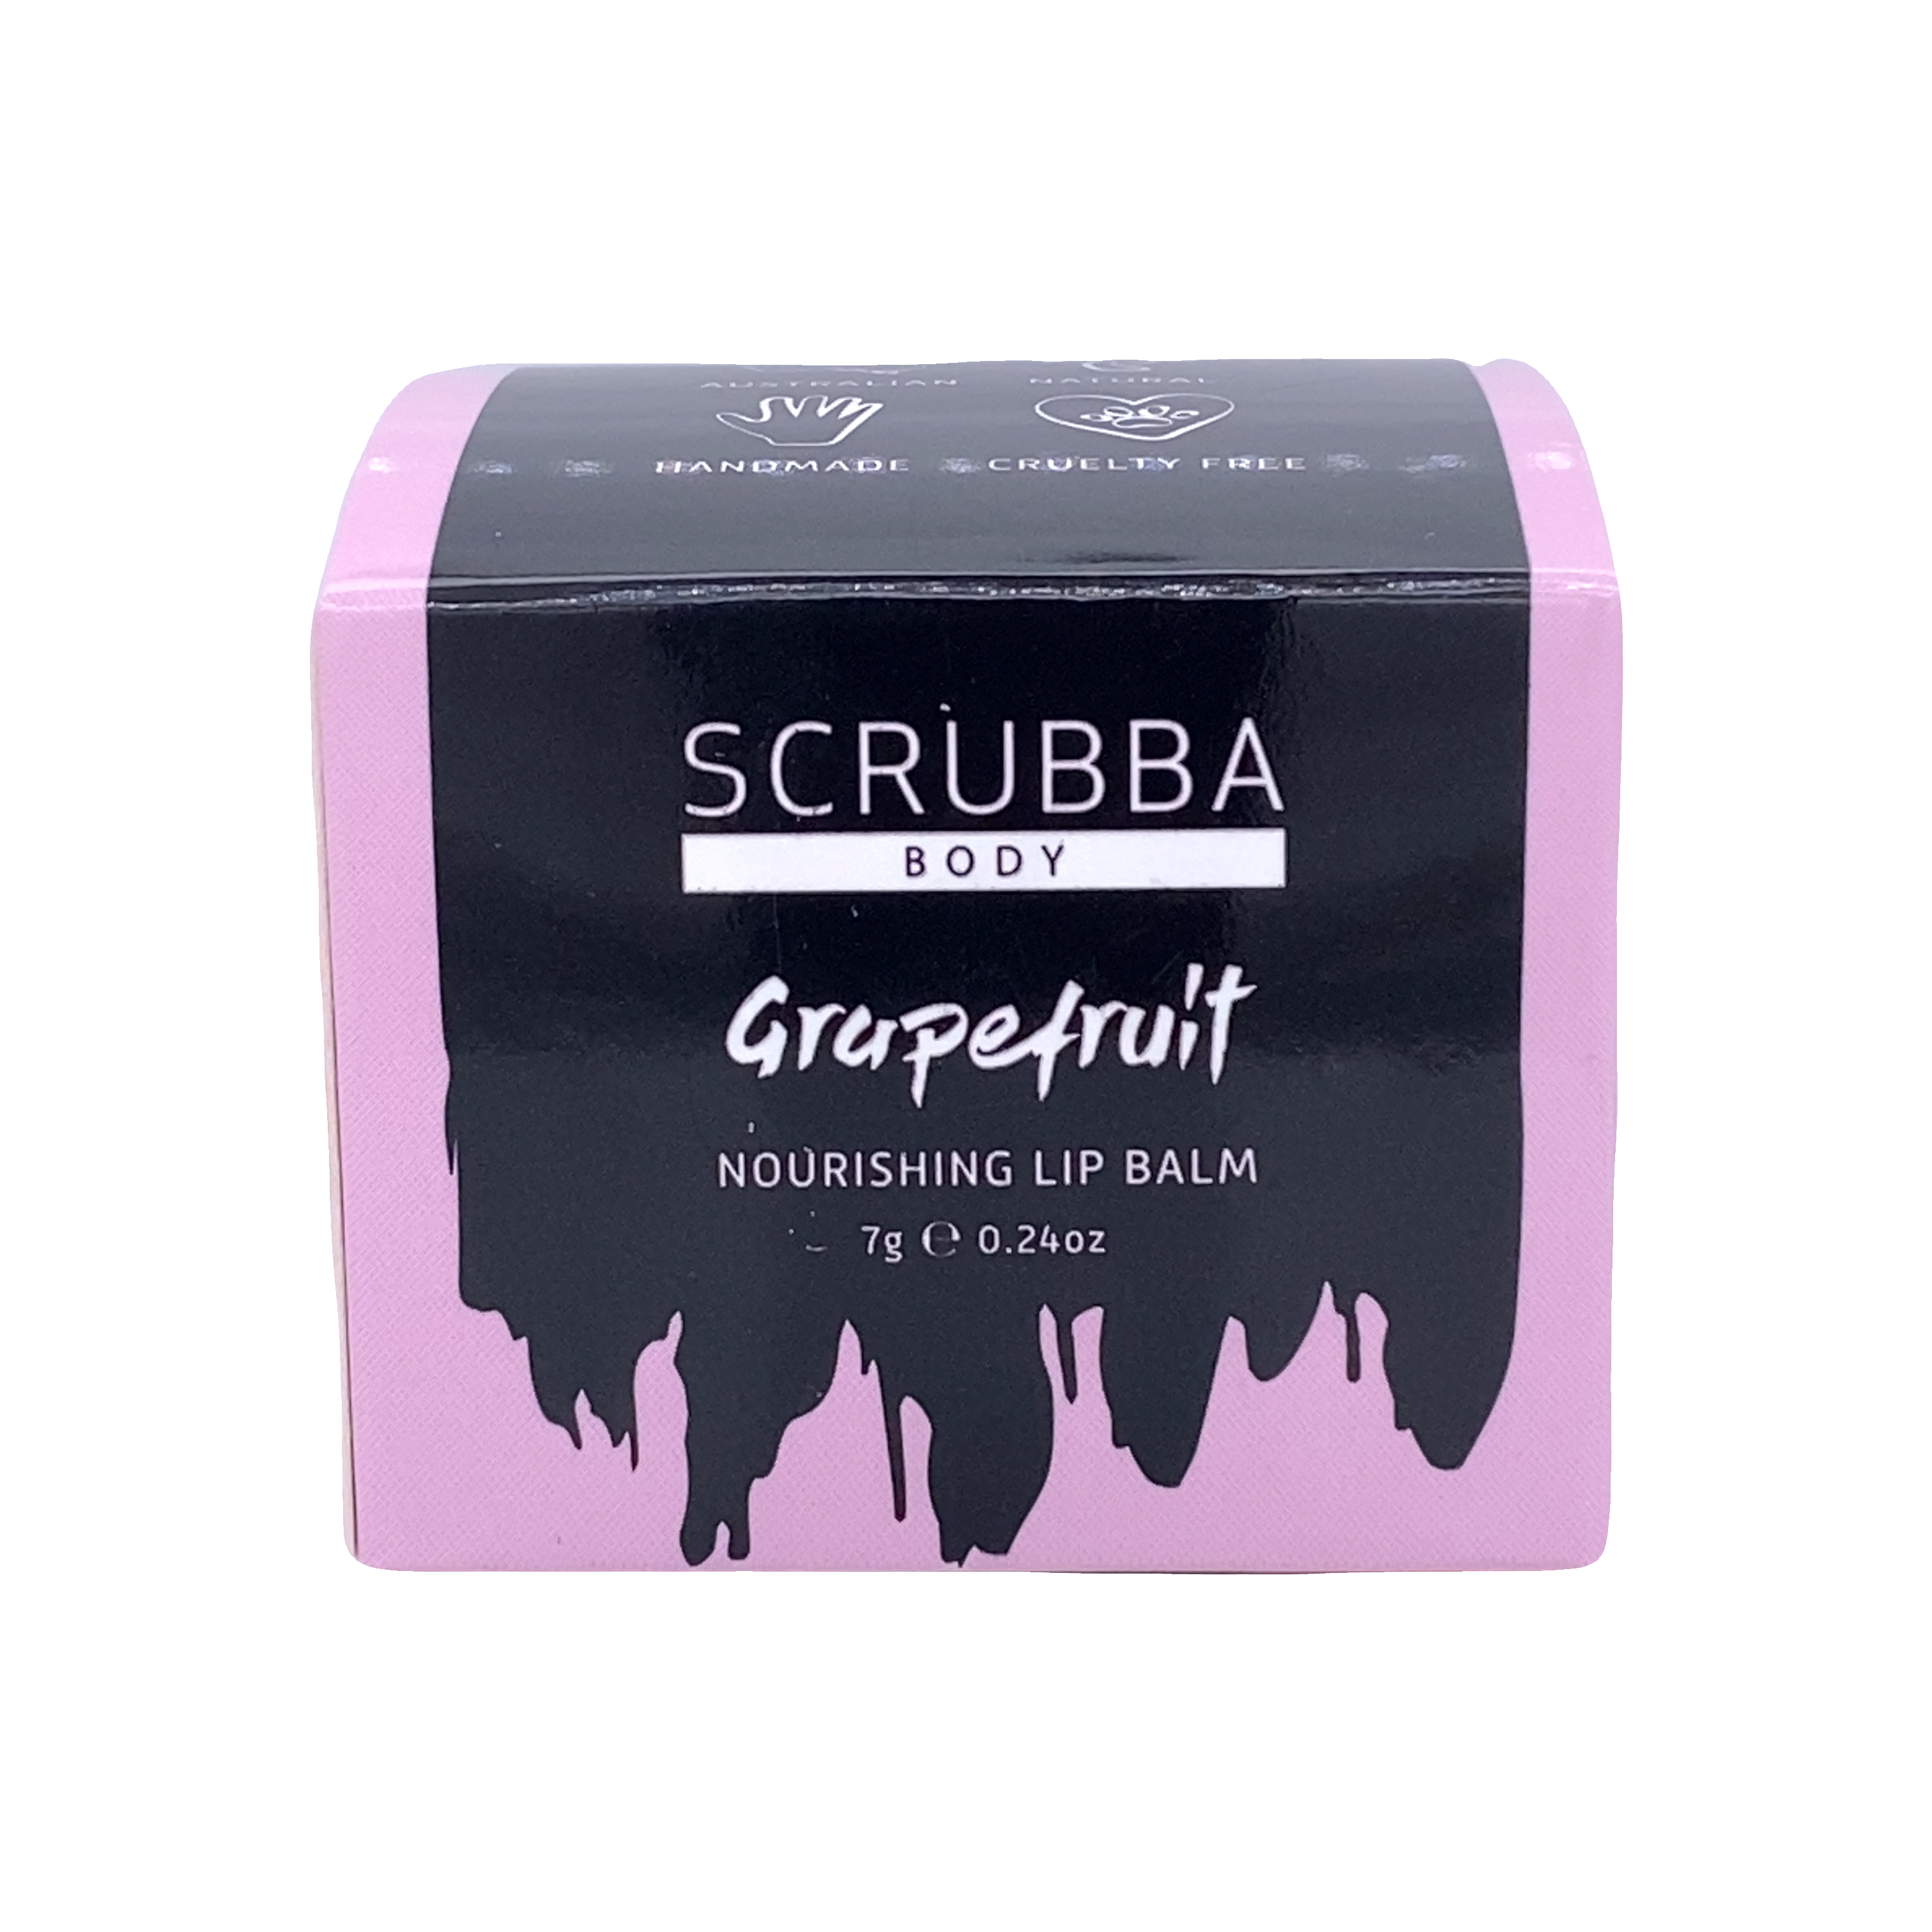 Scrubba Body- Grapefruit Nourishing Lip Balm